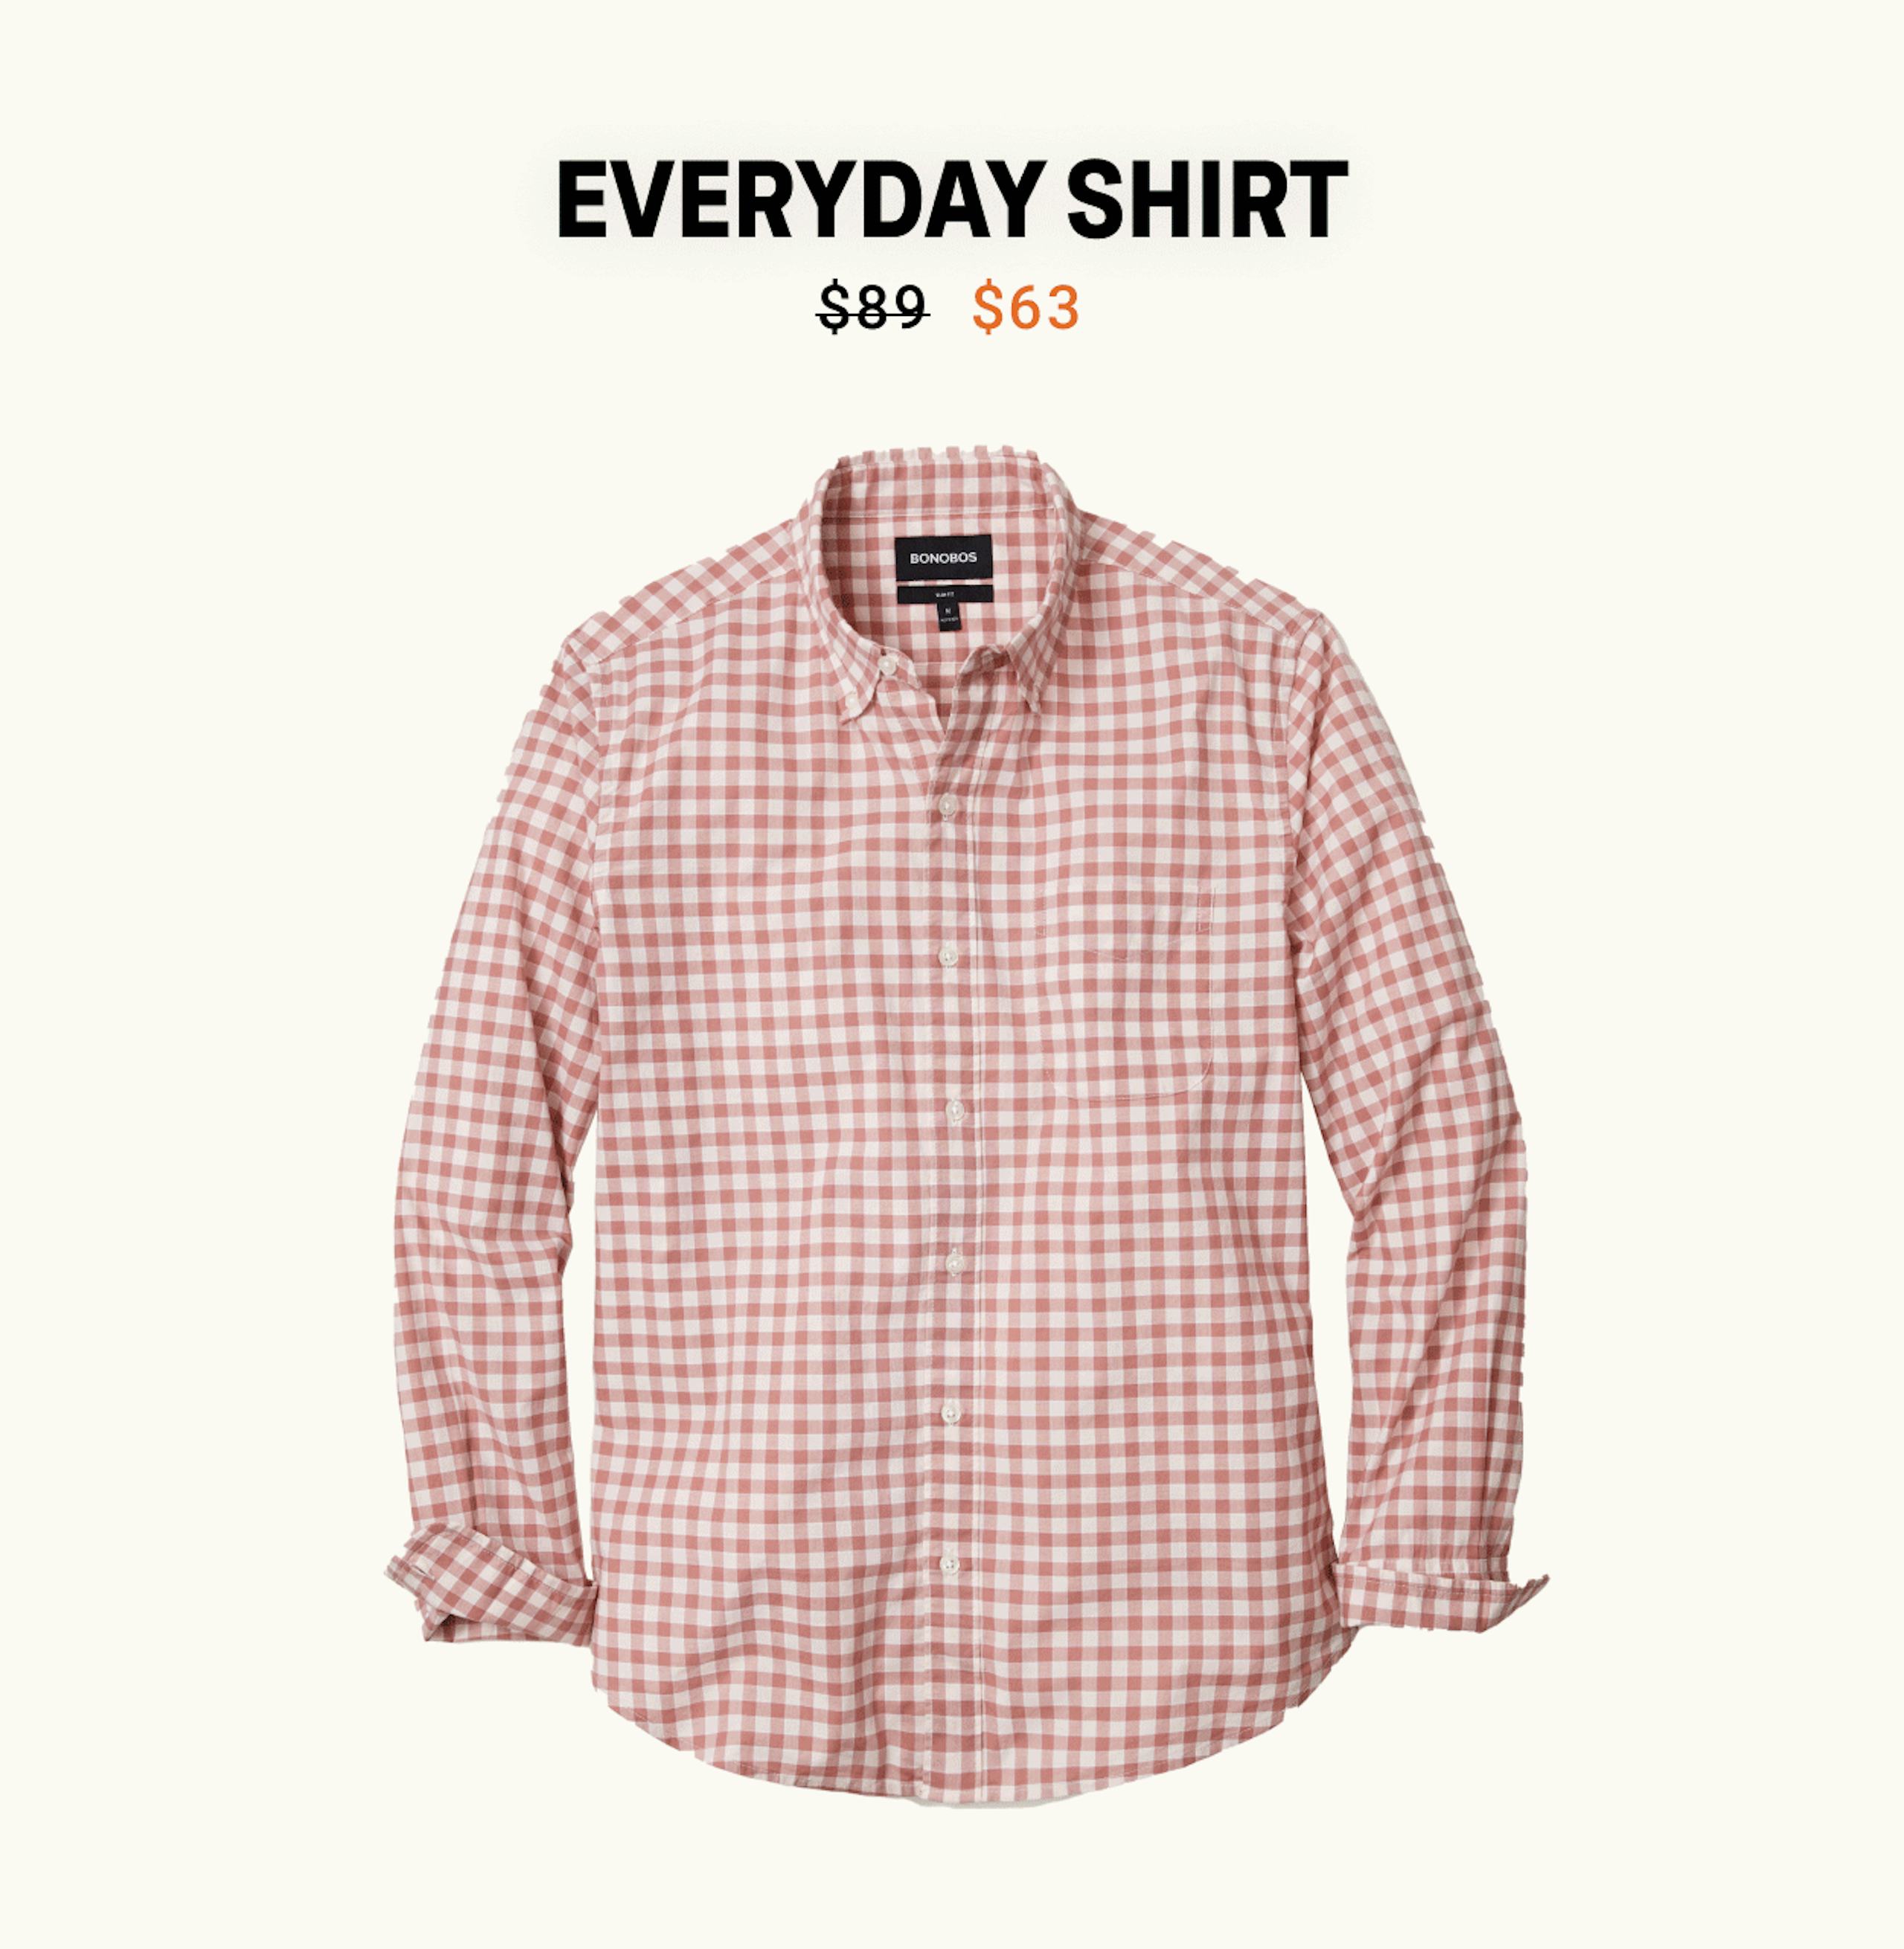 Everyday Shirt $63